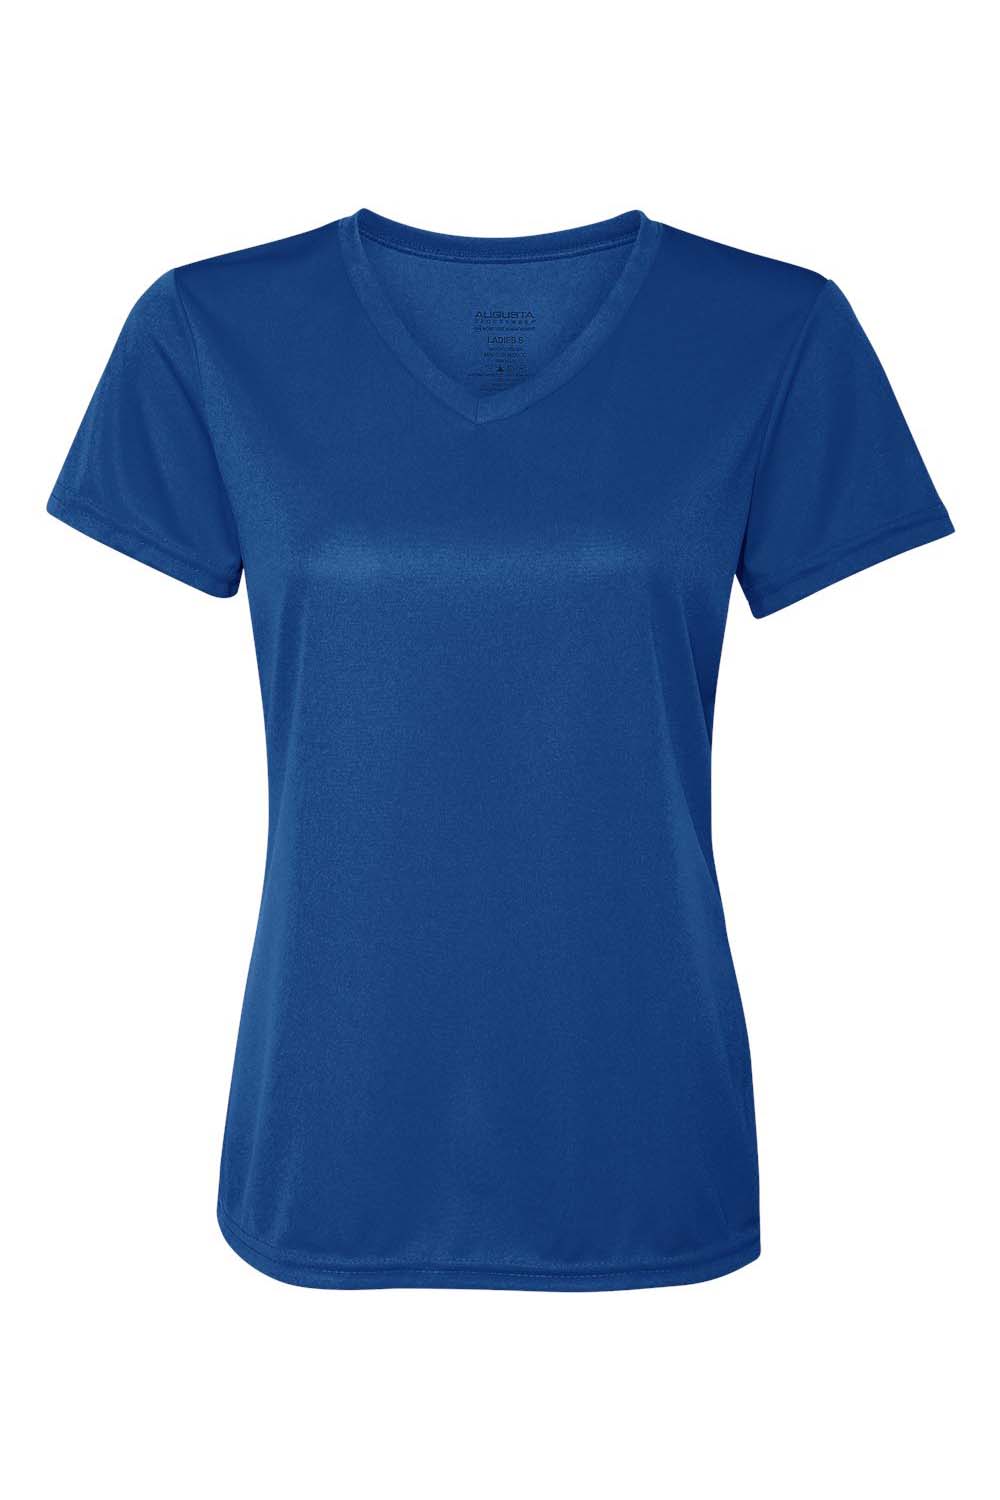 Augusta Sportswear 1790 Womens Moisture Wicking Short Sleeve V-Neck T-Shirt Royal Blue Model Flat Front